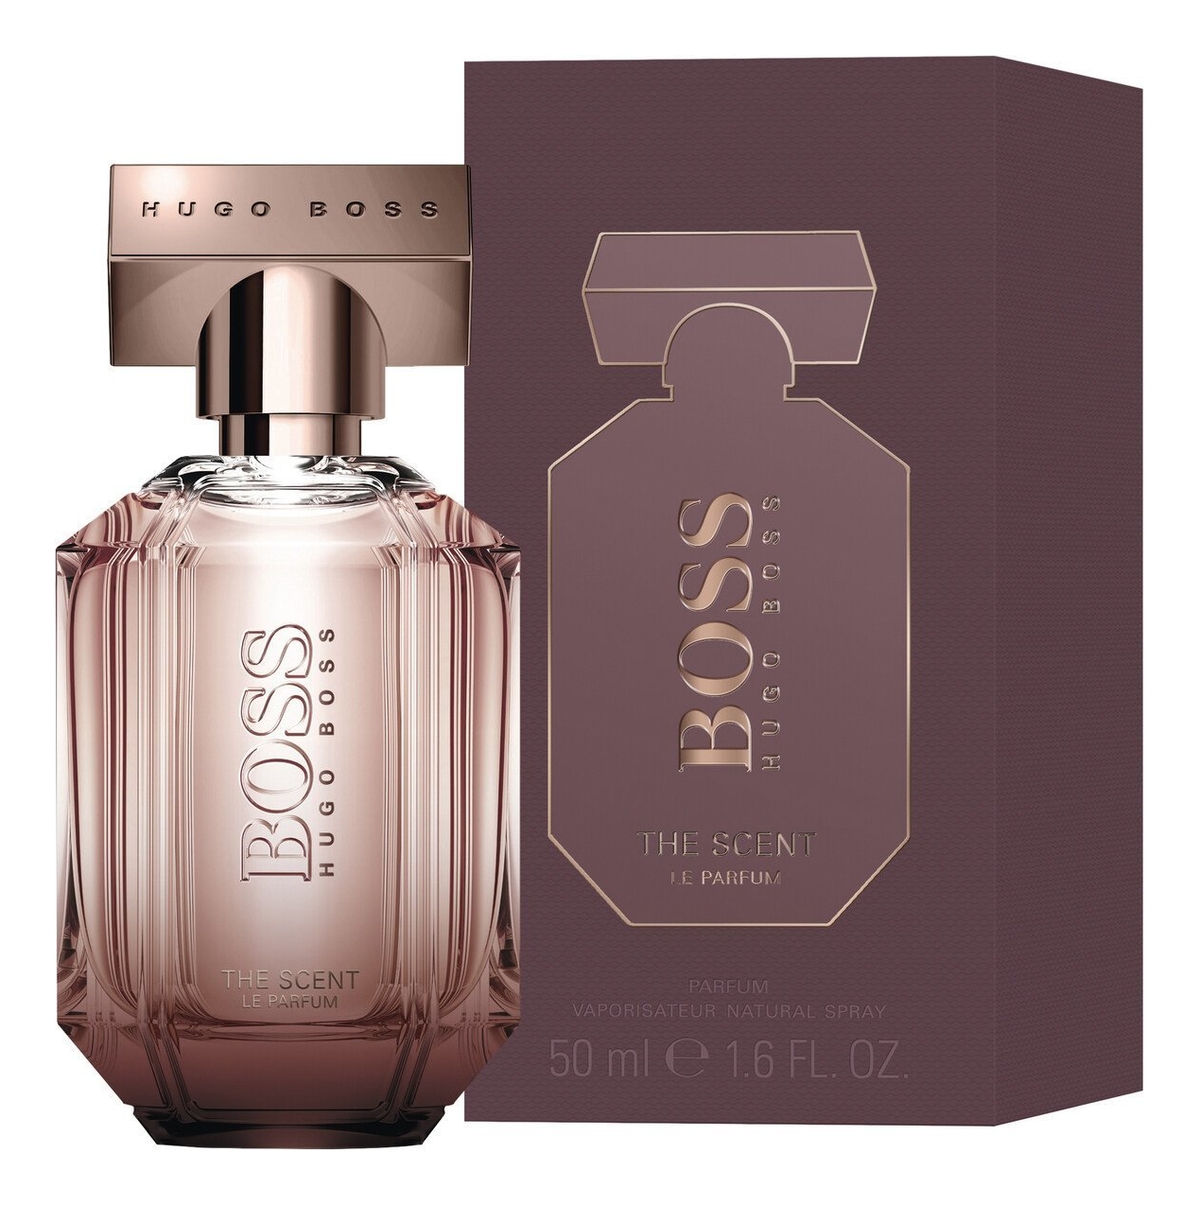 Купить The Scent Le Parfum For Her: духи 50мл, Hugo Boss